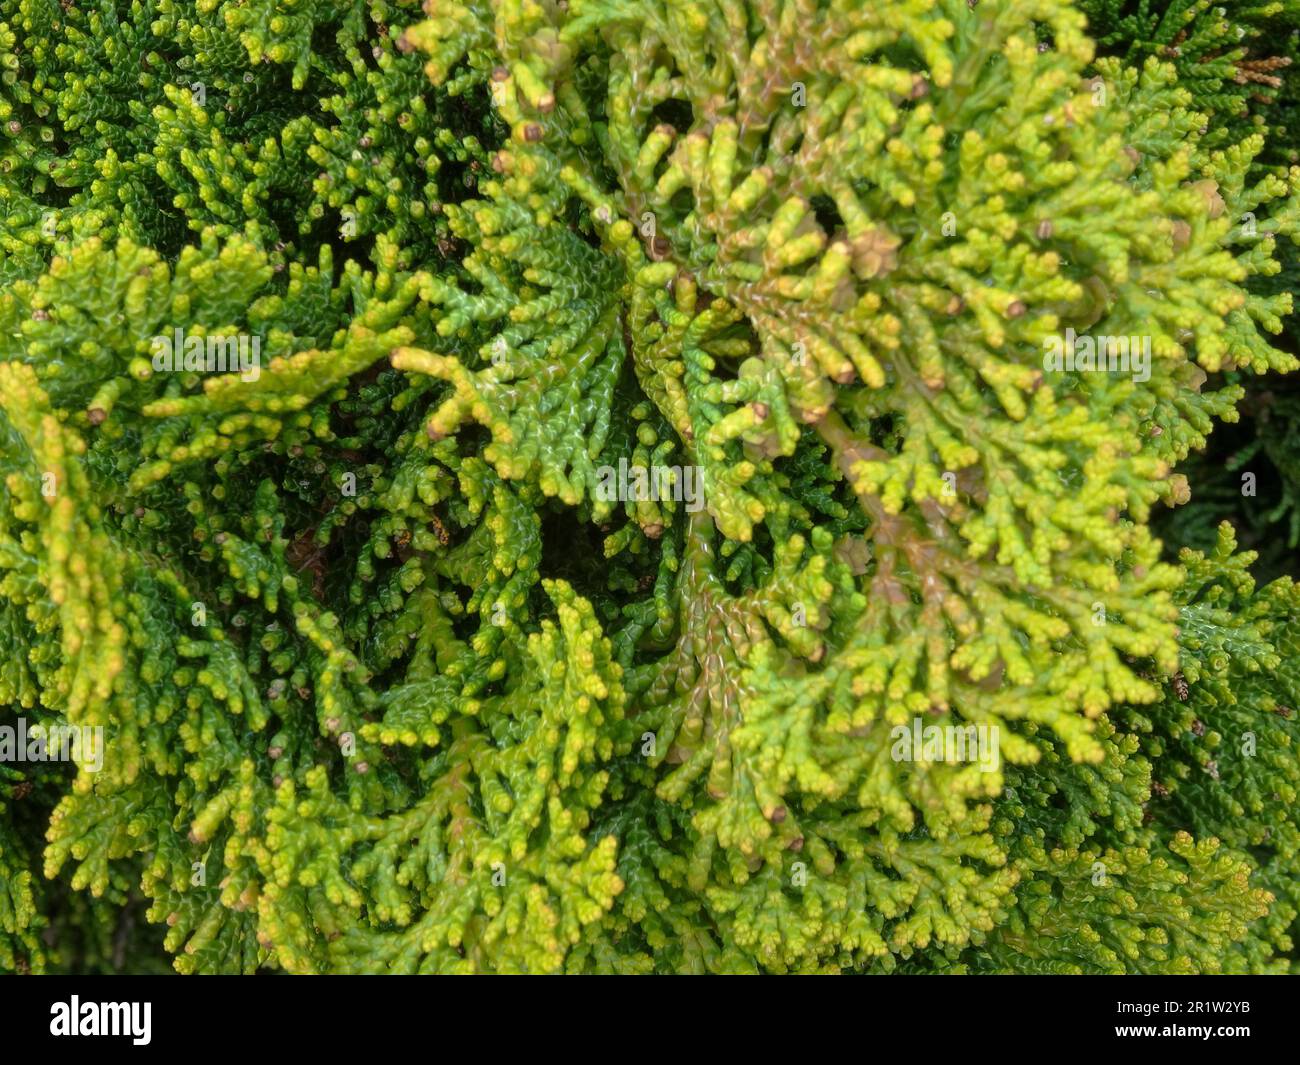 Heavily textured Chamaecyparis Obtusa Nana Gracilis. Natural close up plant portrait Stock Photo